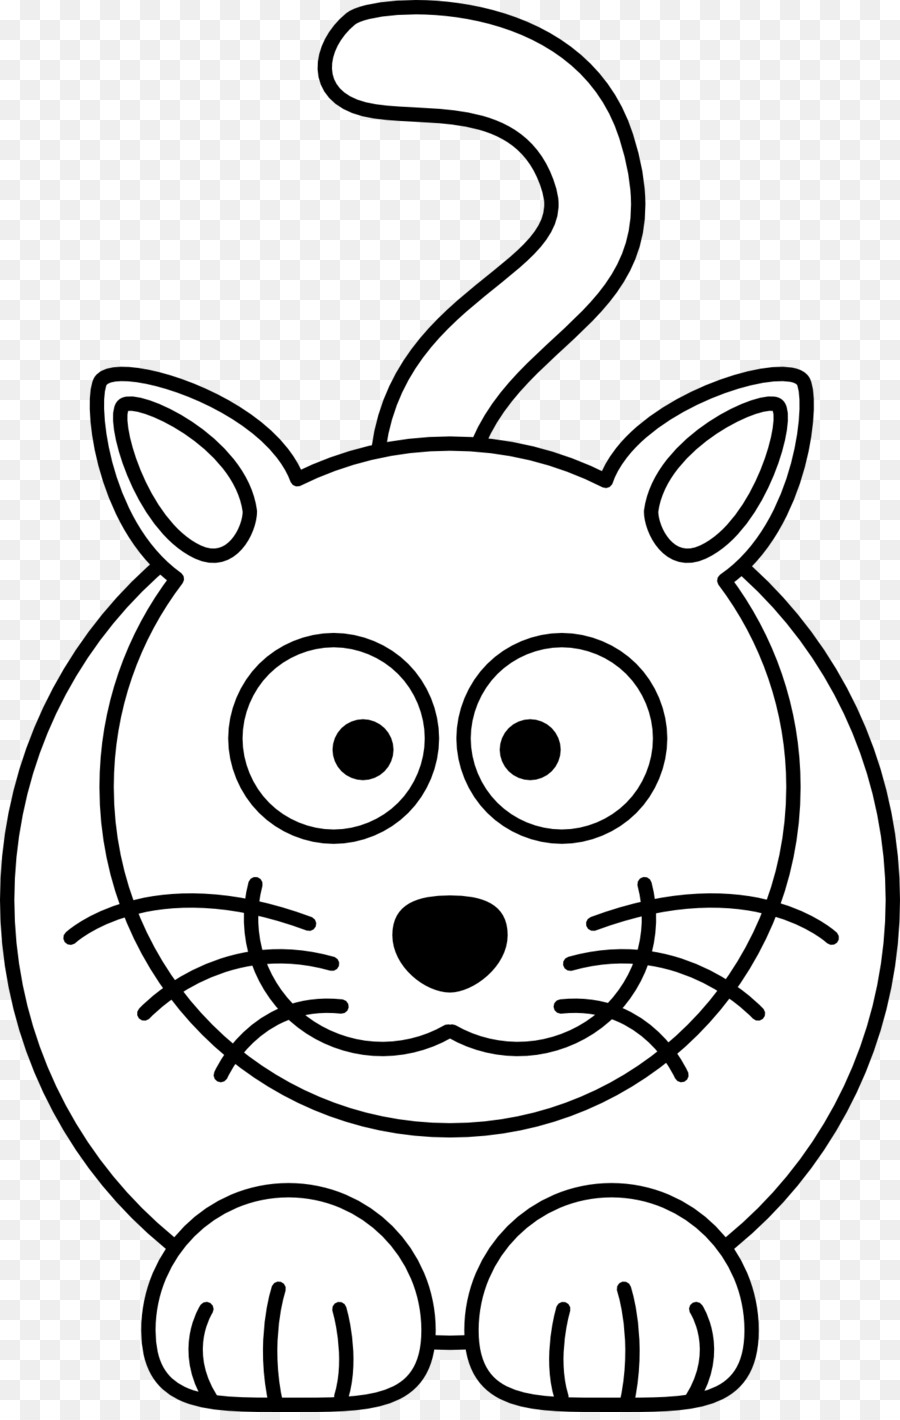  Gambar  Kepala Kucing  Kartun Hitam  Putih  81021 Nama 